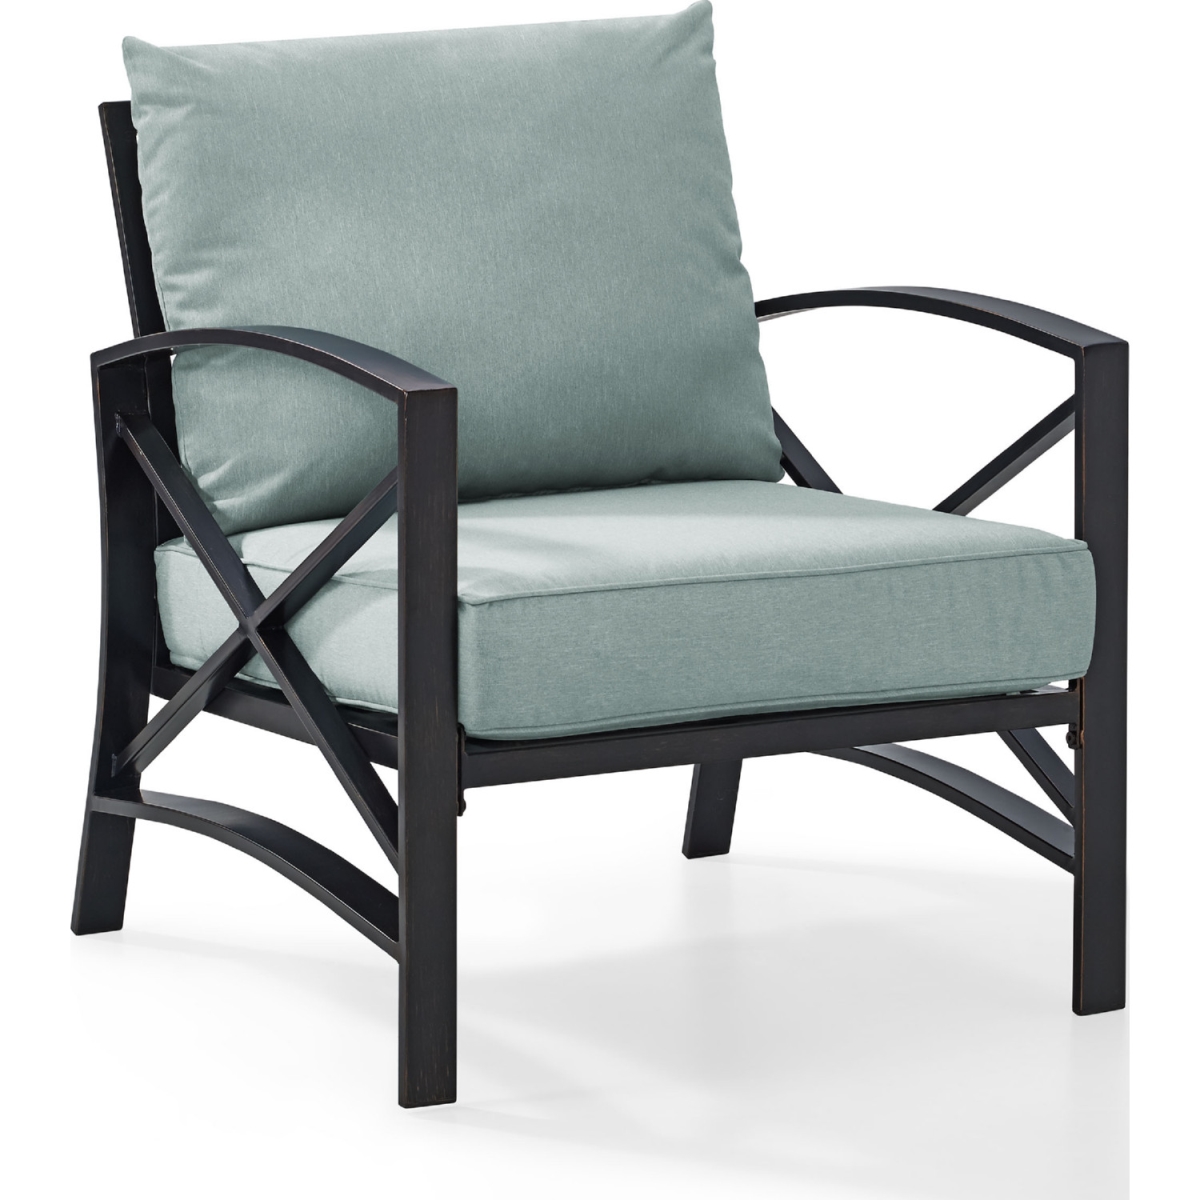 Ko60007bz-mi Kaplan Arm Chair, Oiled Bronze With Mist Universal Cushion Cover